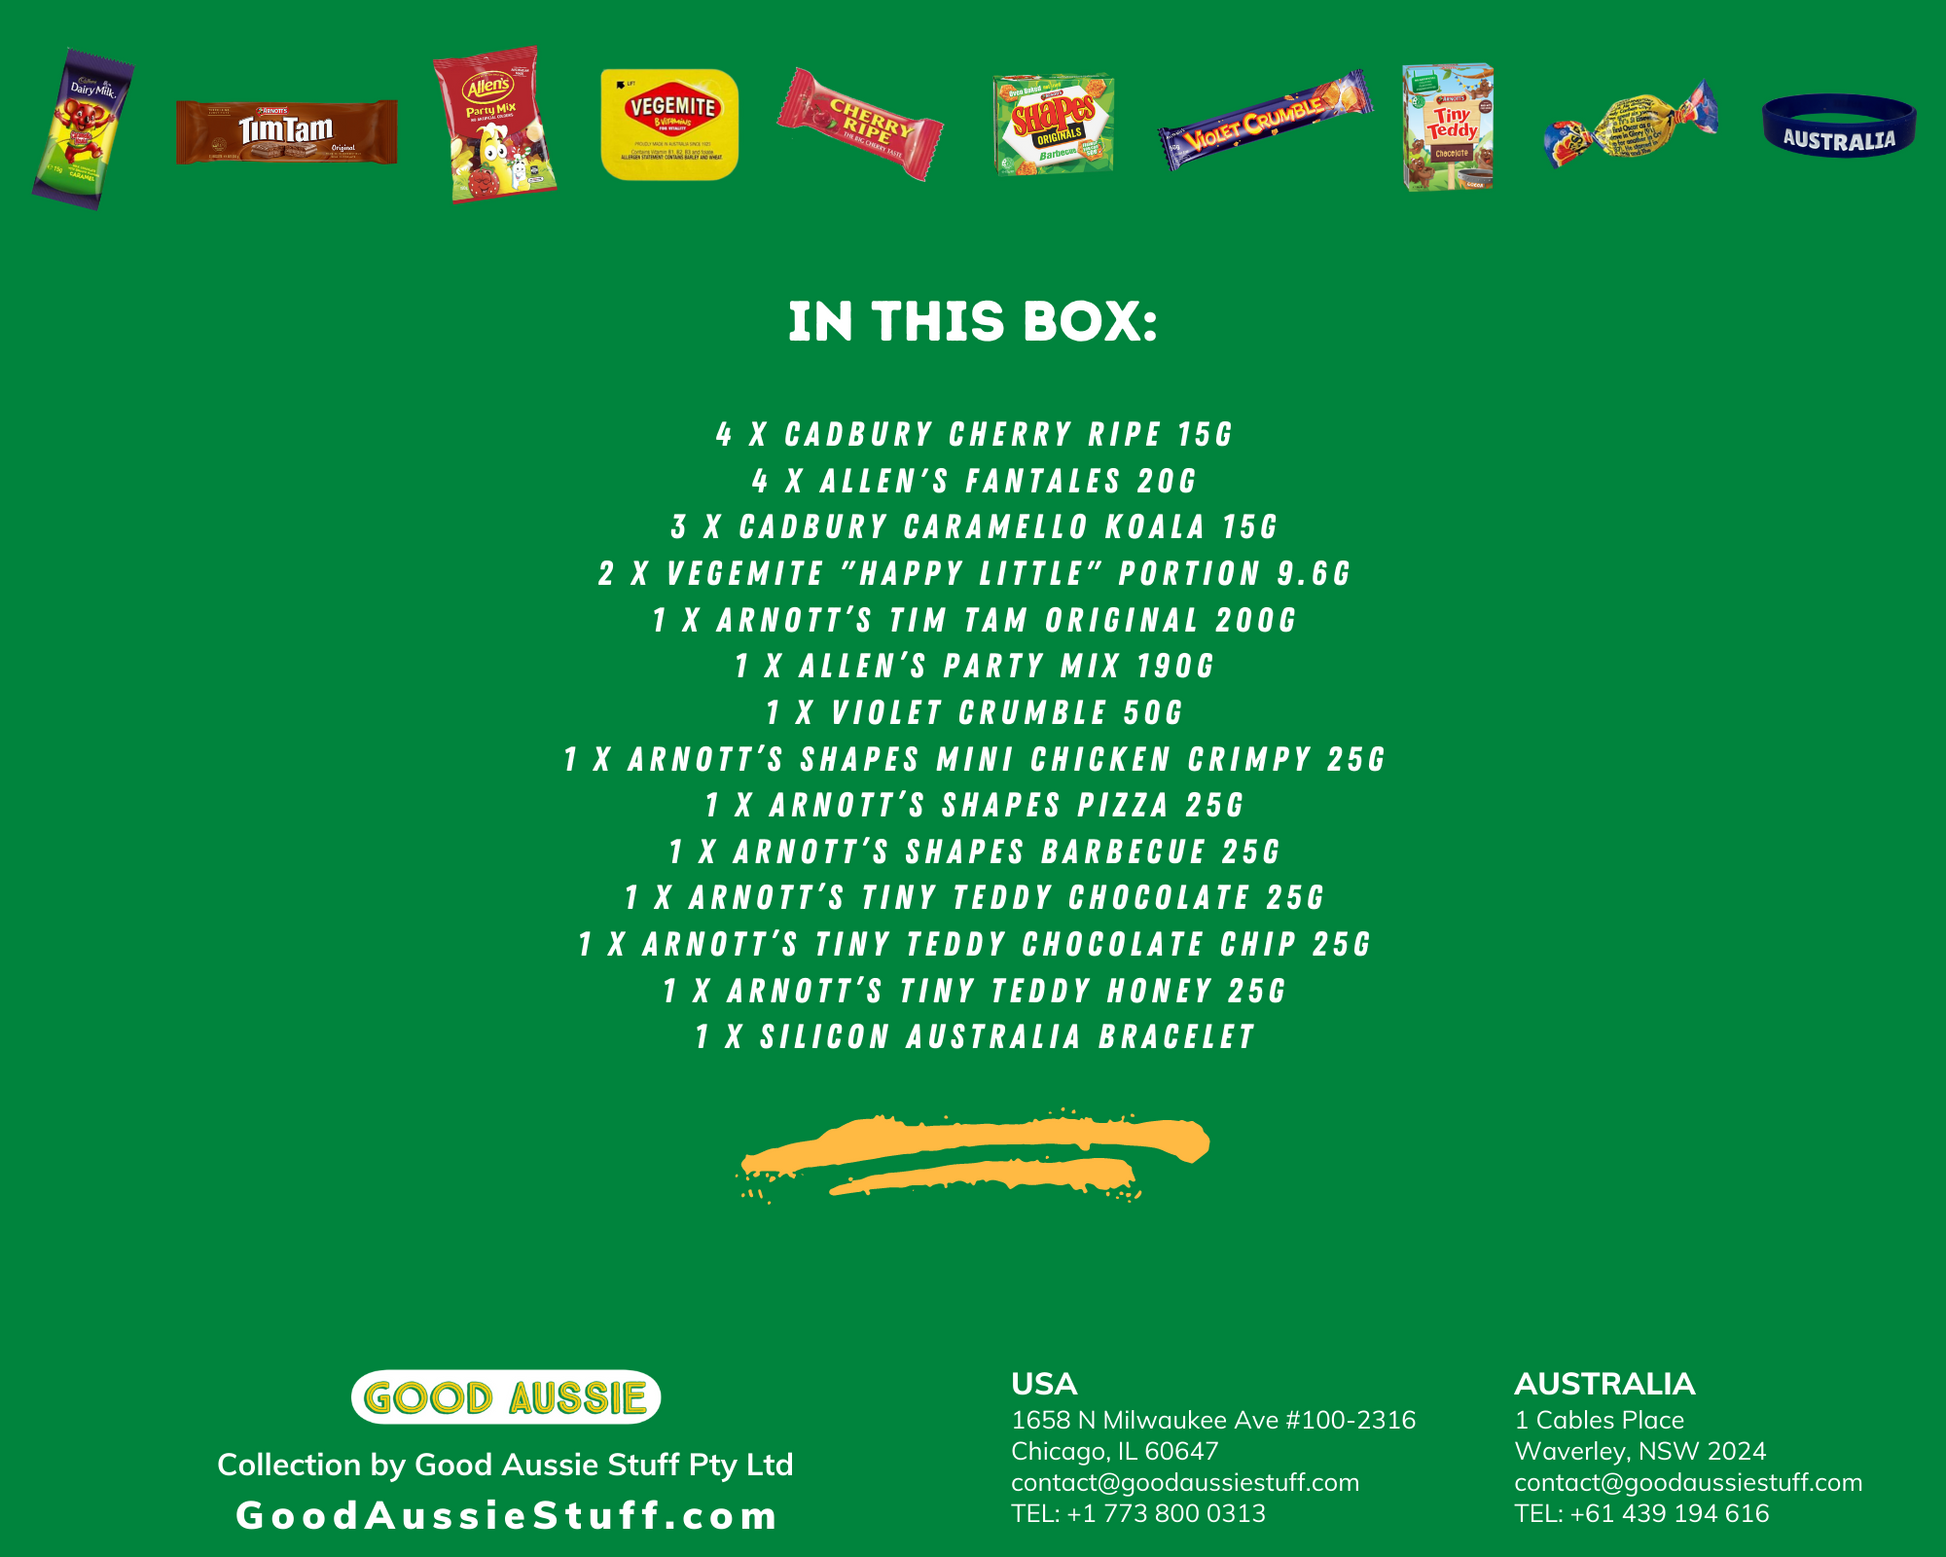 Best of Australia Chocolate & Snack Box - By Good Aussie.